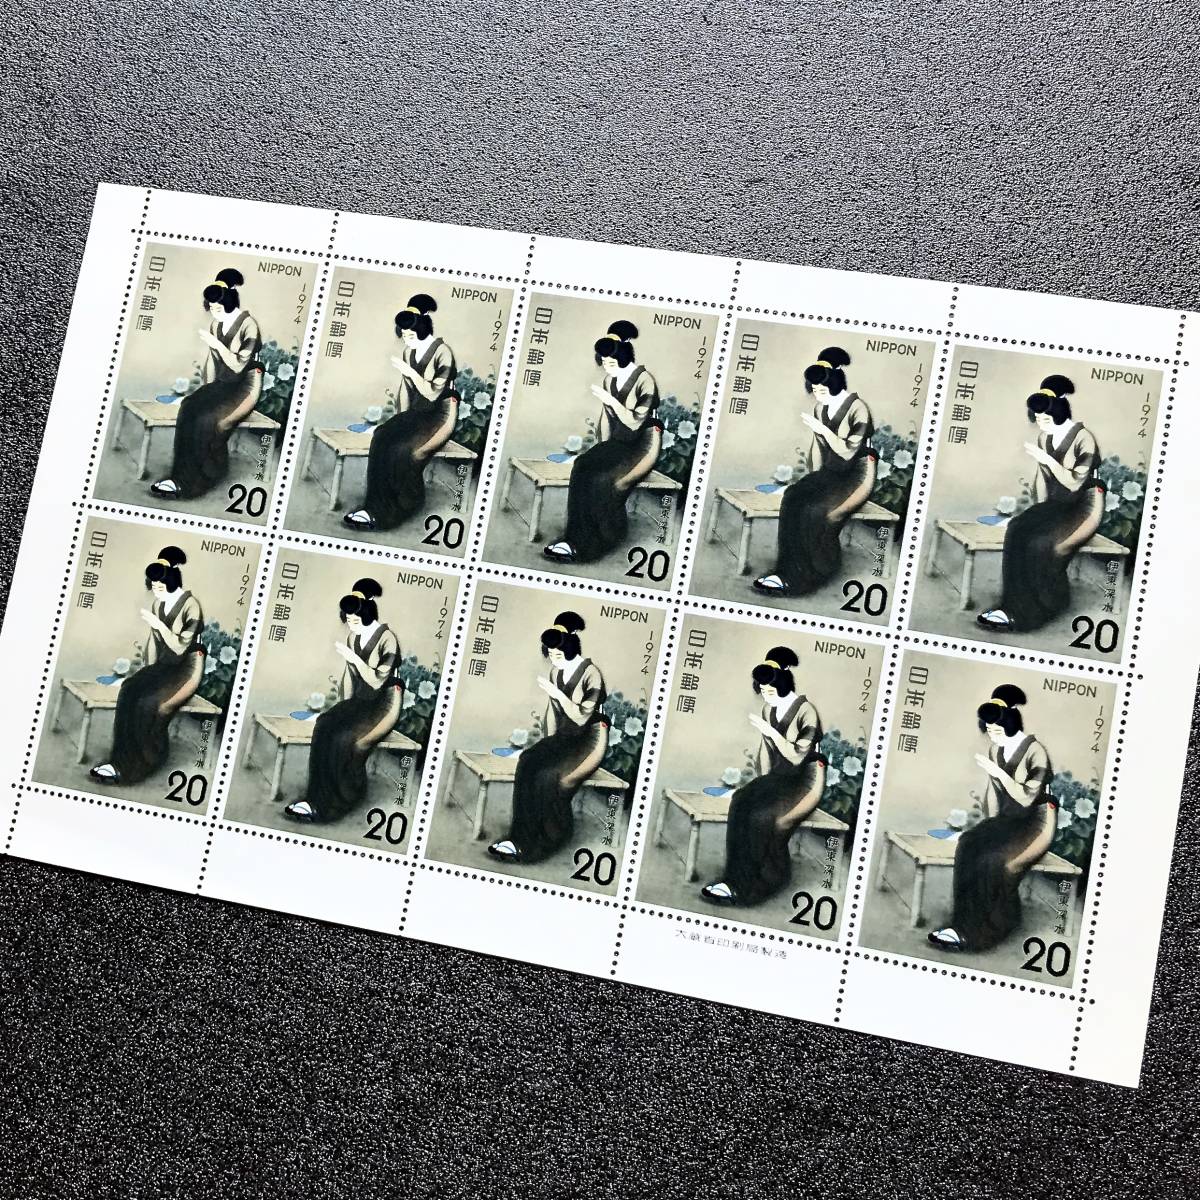 68 Off 日本切手ー未使用1974年切手趣味週間円 10枚 全面シート 1シート Bagochile Cl